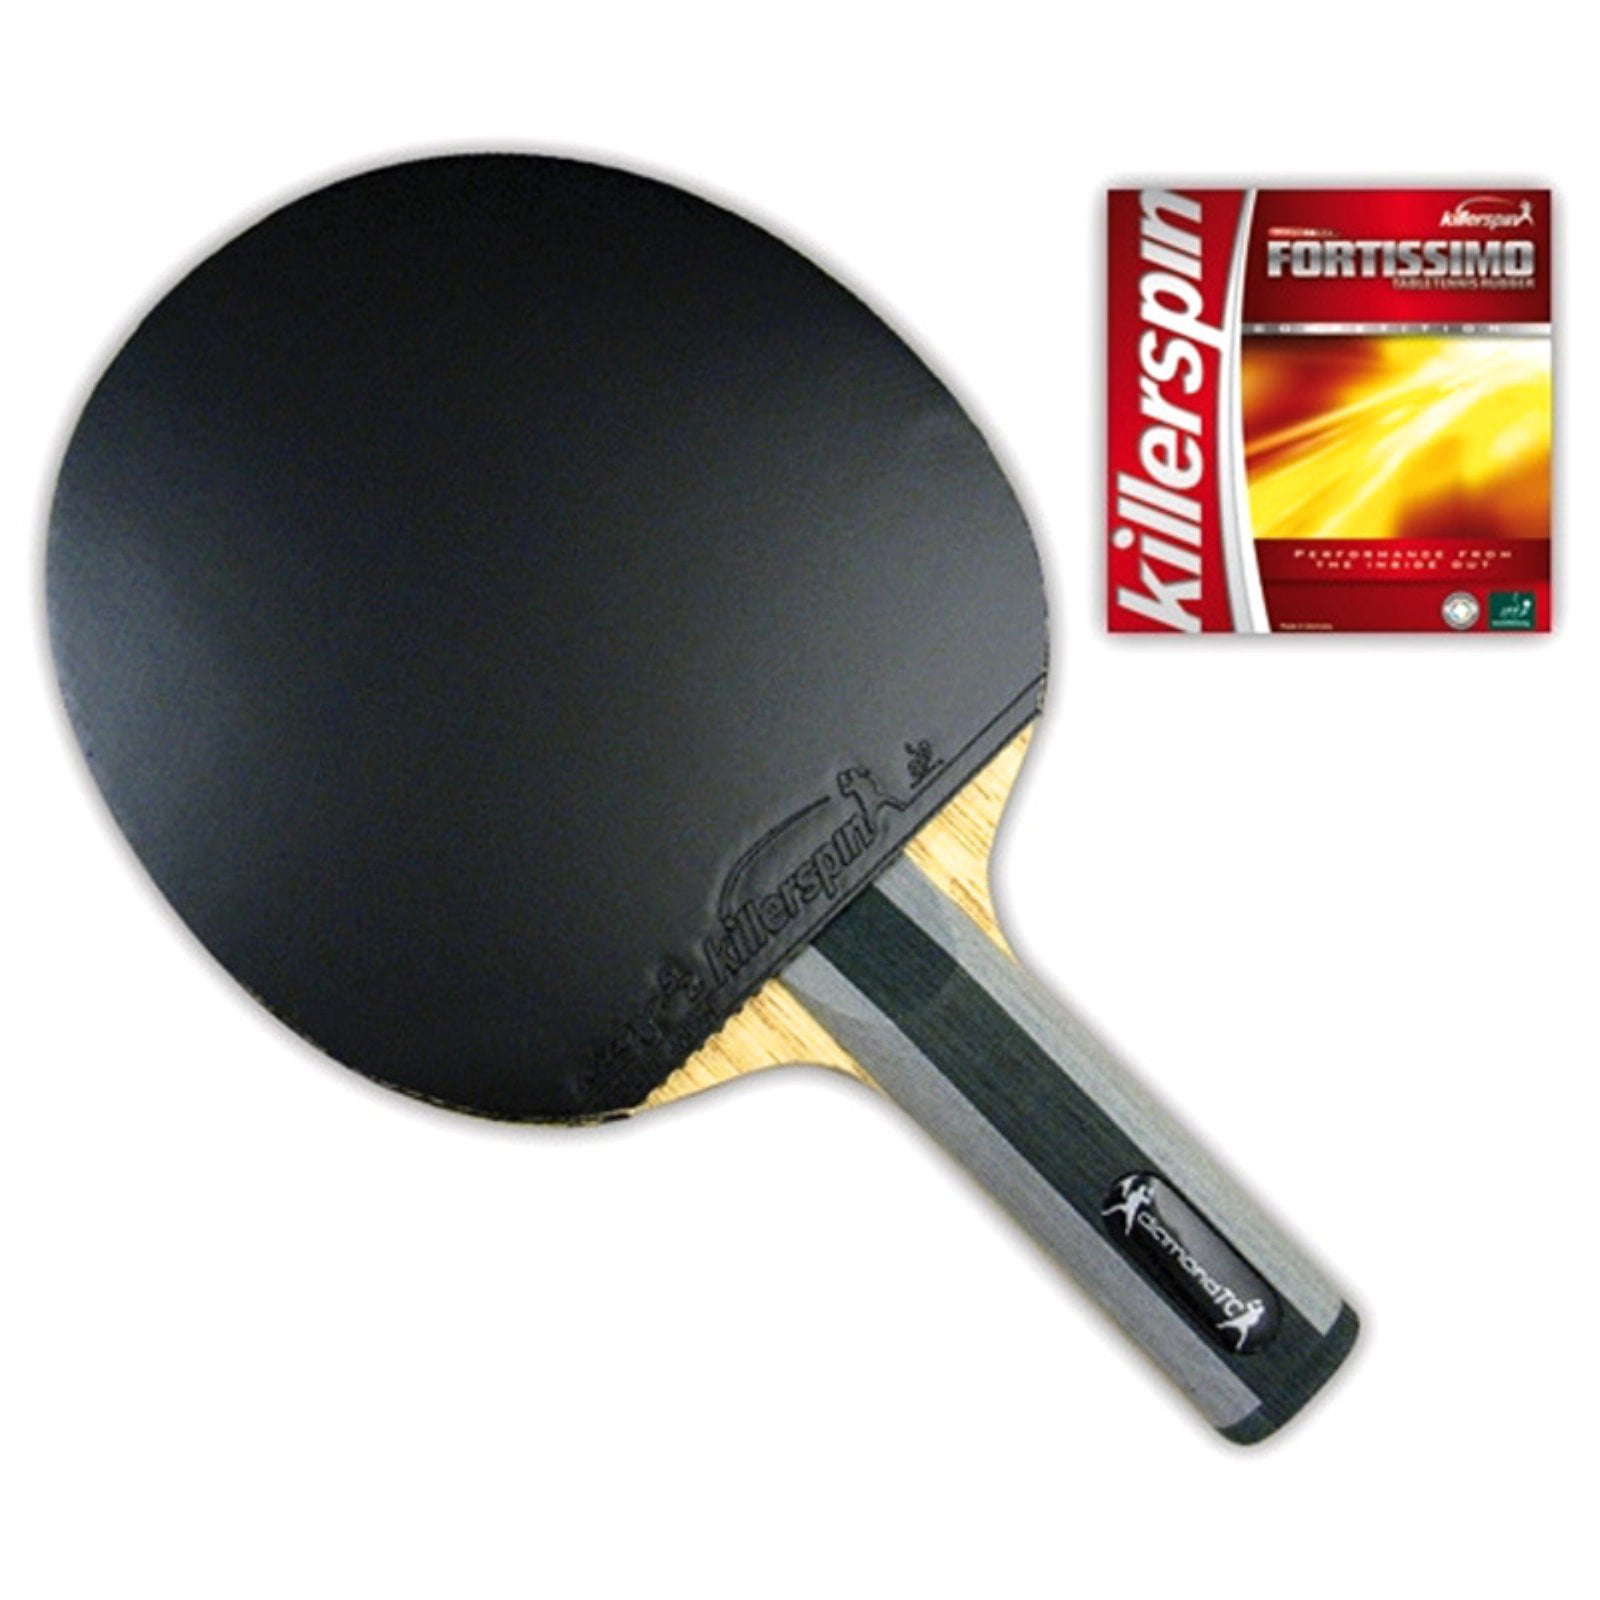 Flared NEW Killerspin 100-36 RTG Diamond TC Premium Table Tennis Paddle 